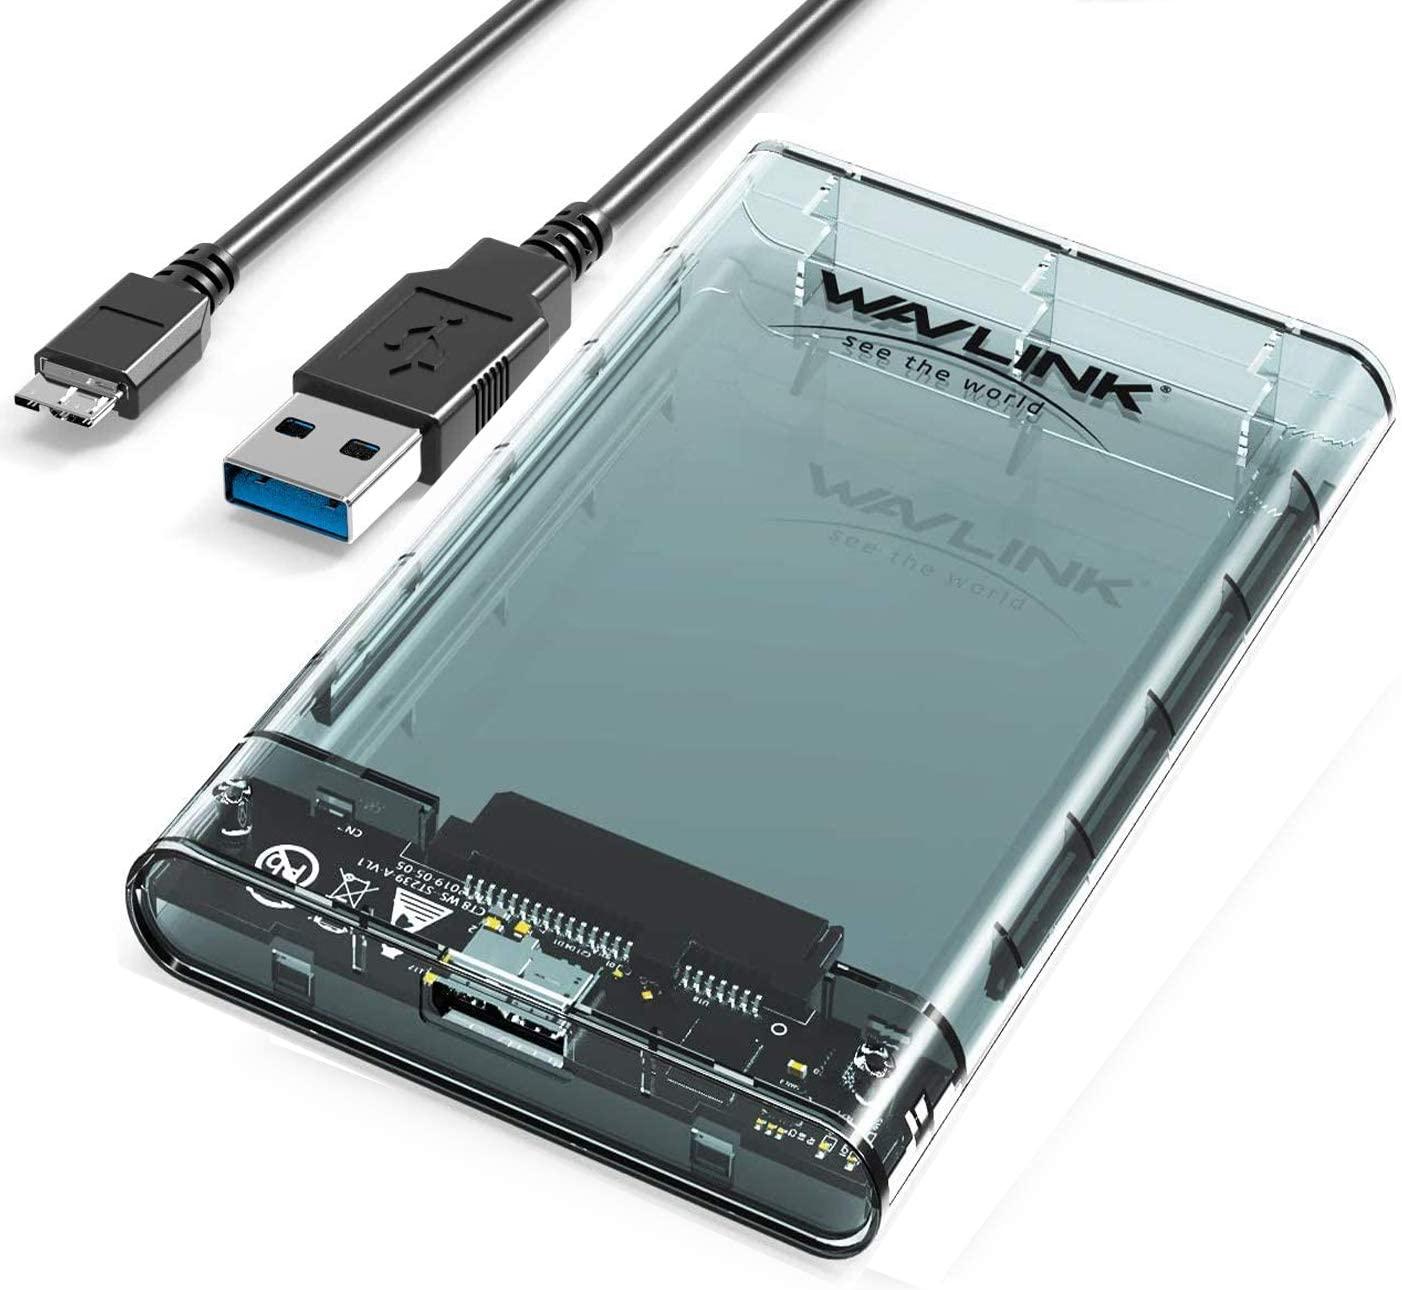 Wavlink USB to SATA External Hard Drive Enclosure for $6.29